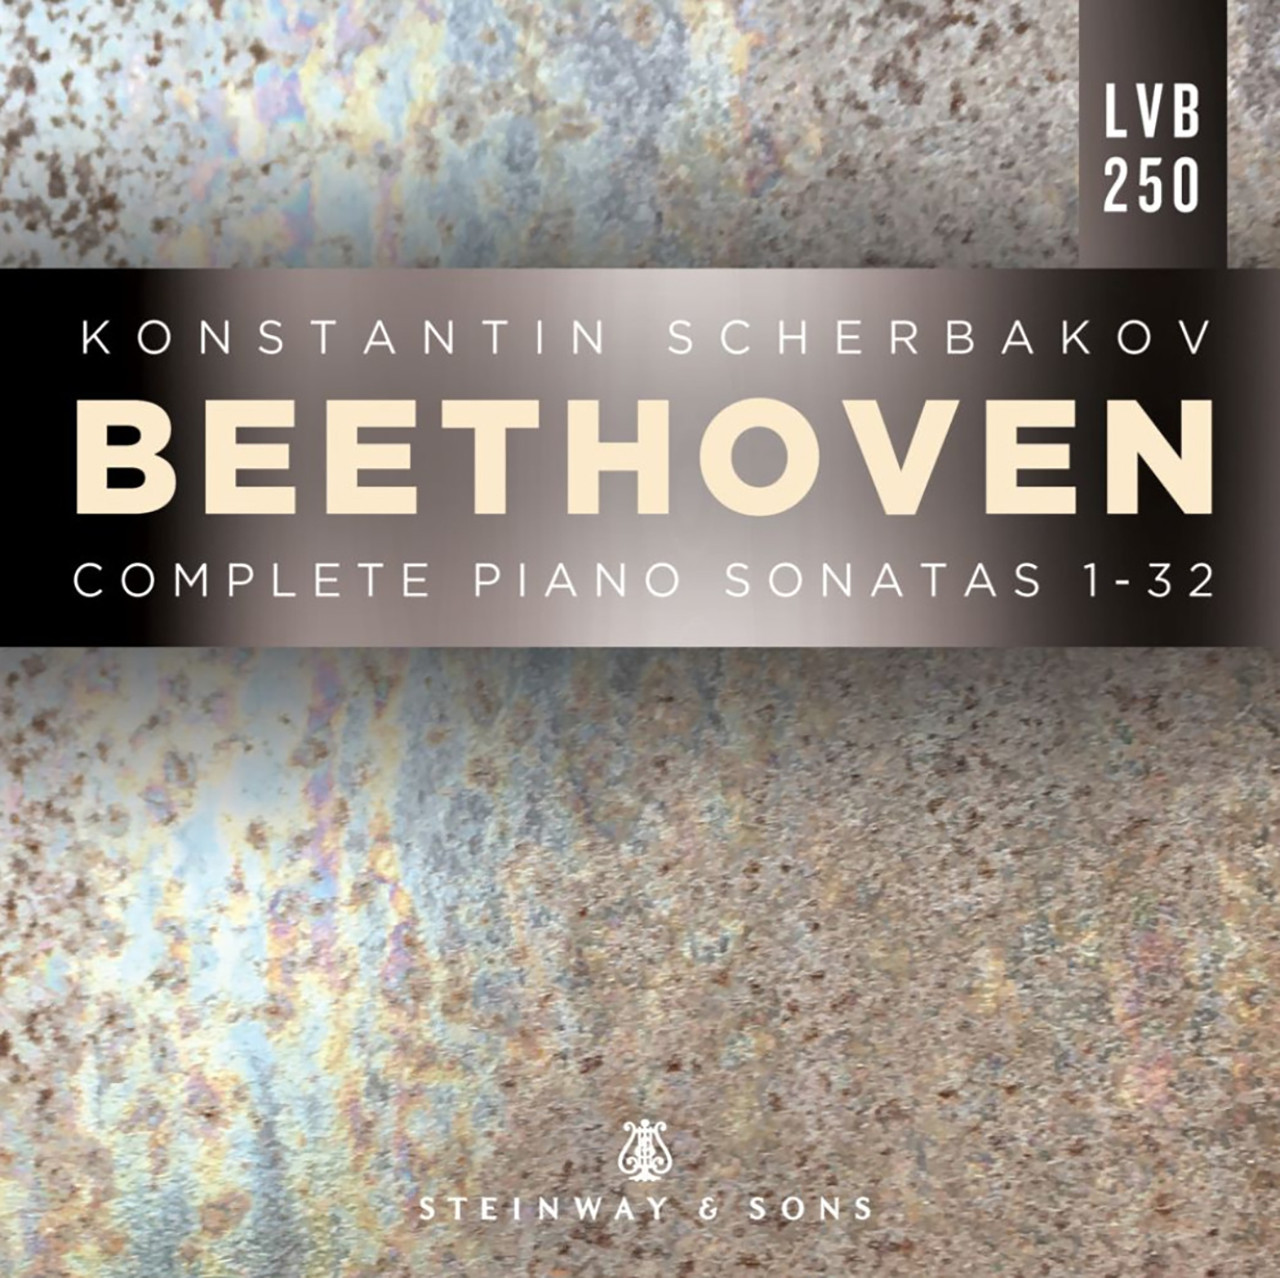 Suction-like stringency: Scherbakov's recording of Beethoven's